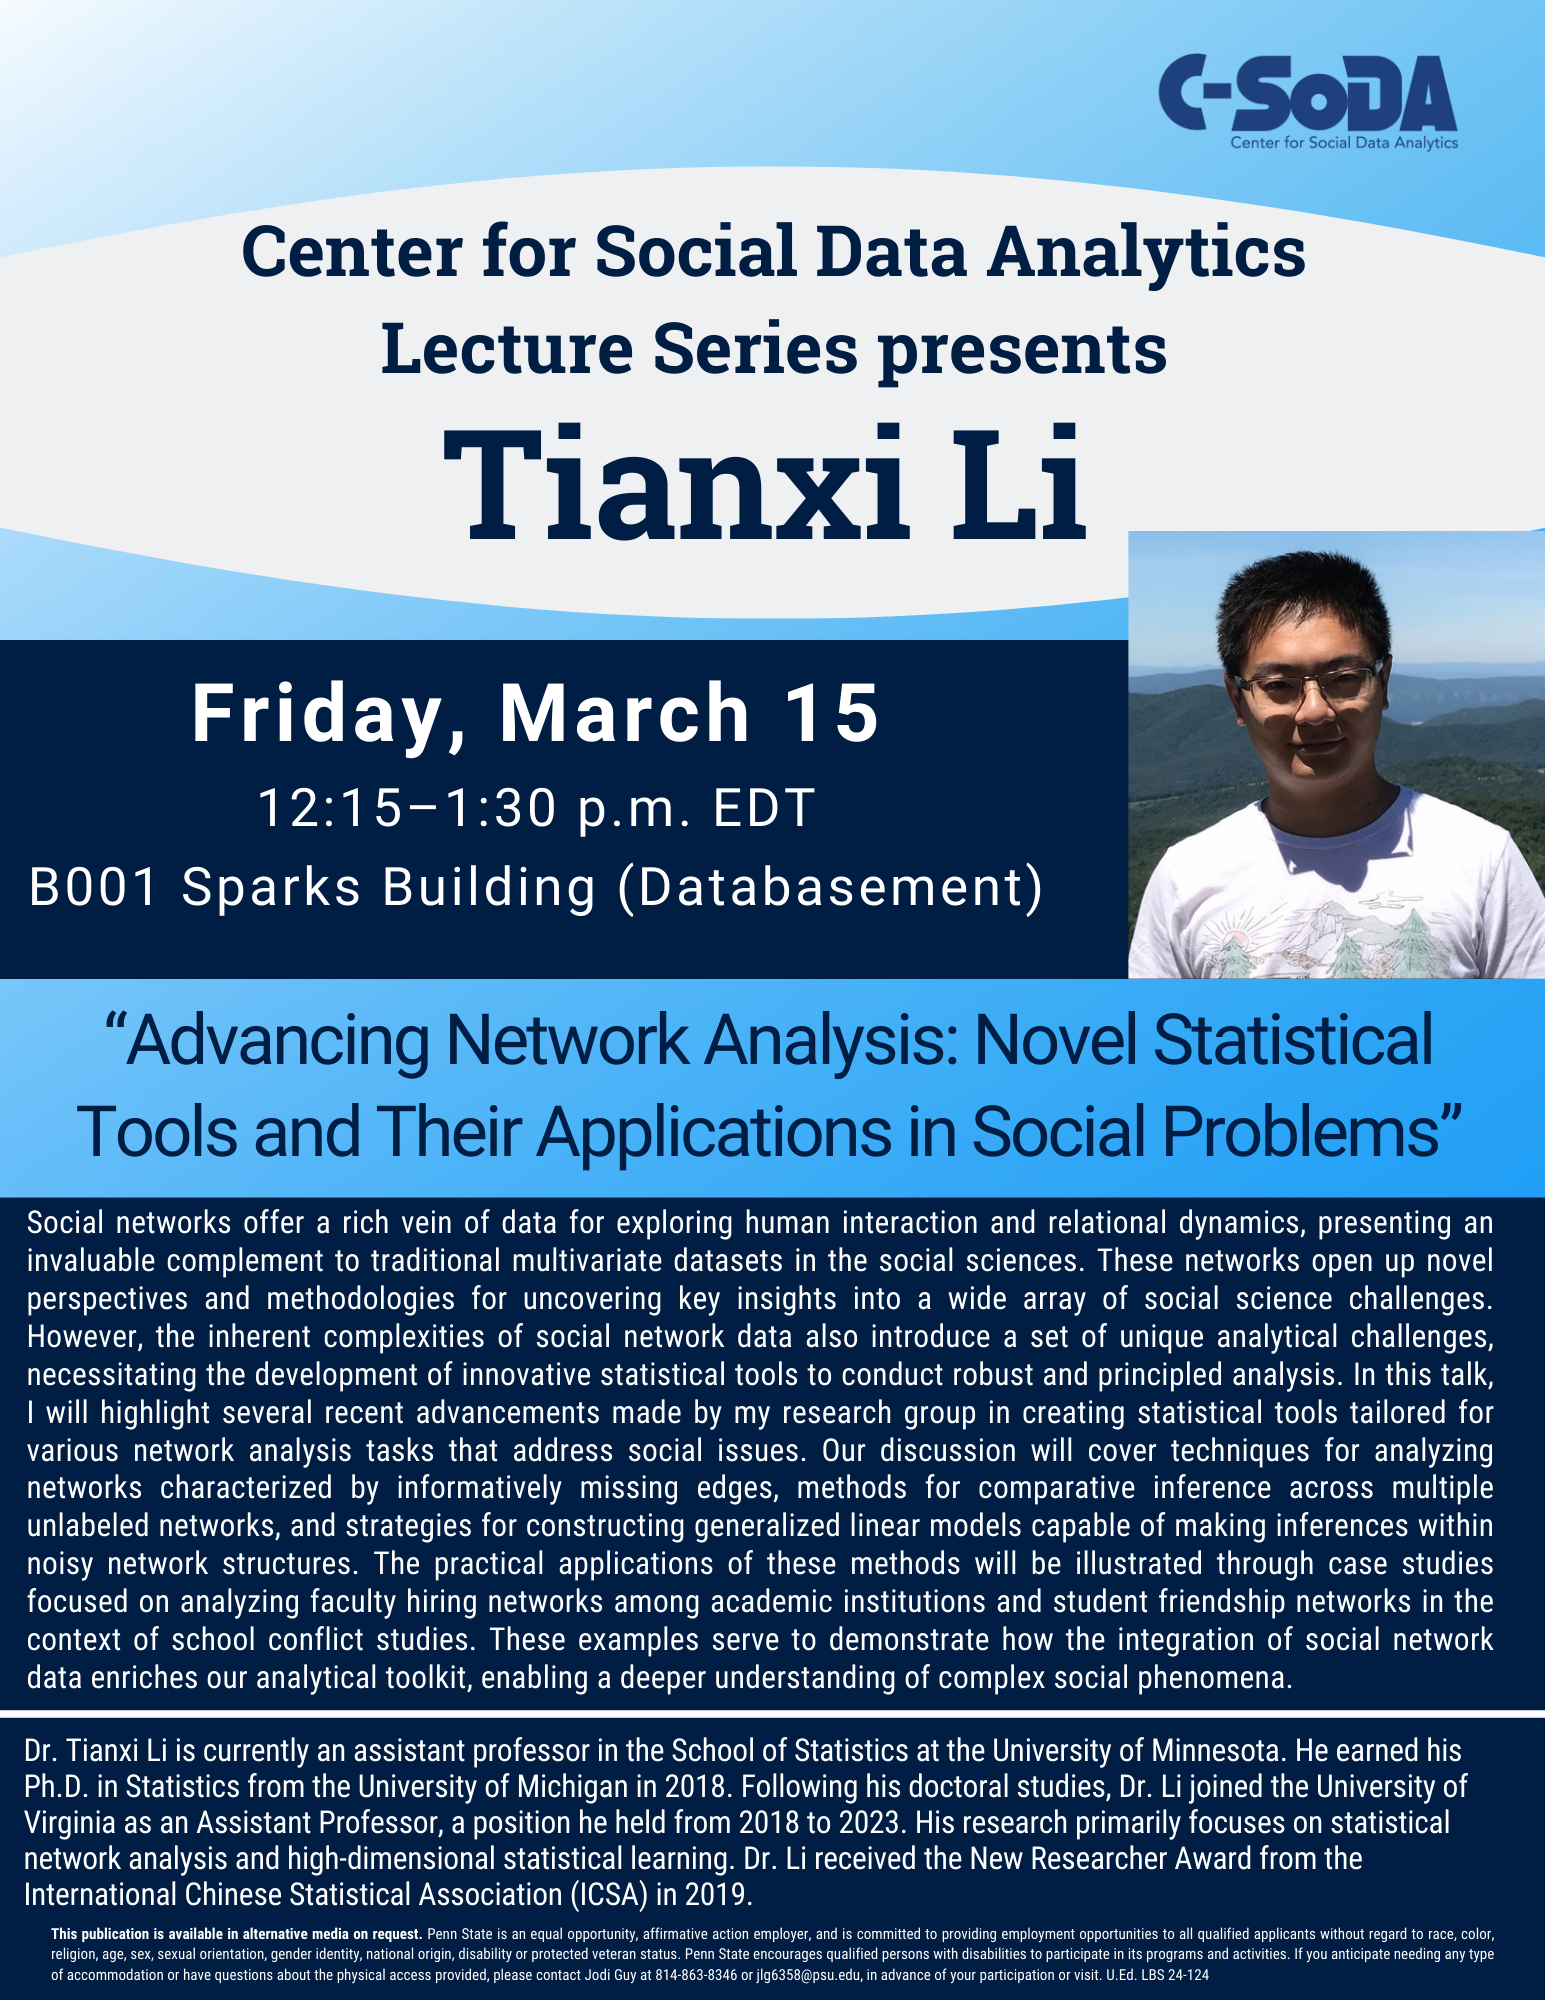 nter for Social Data Analytics Colloquium flier